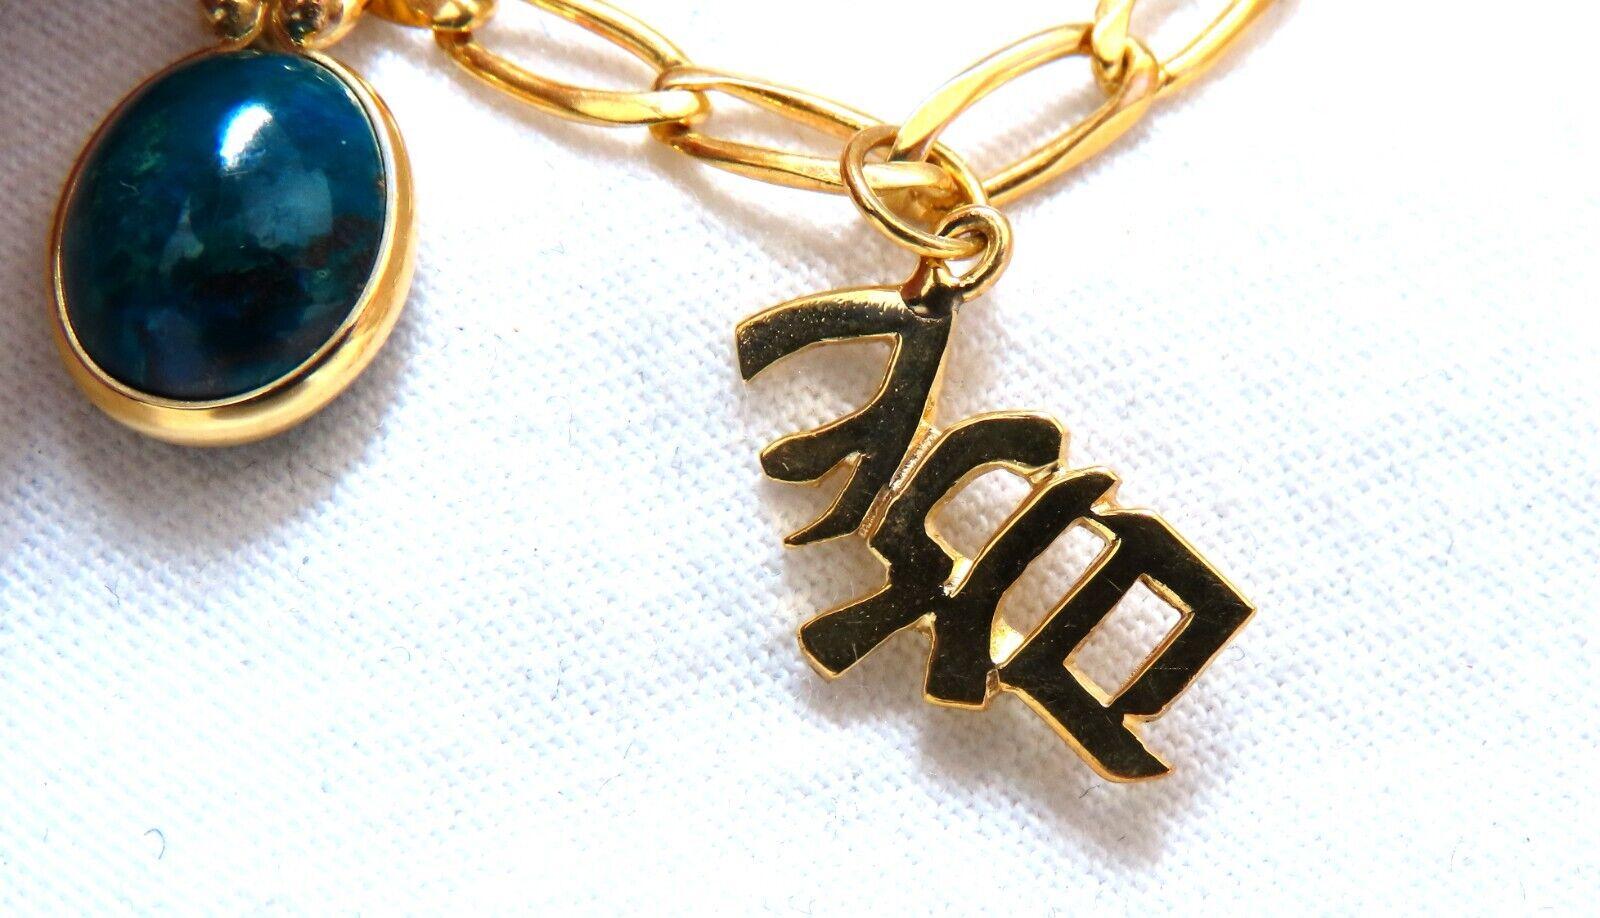 10 karat gold bracelet made in israel with heart